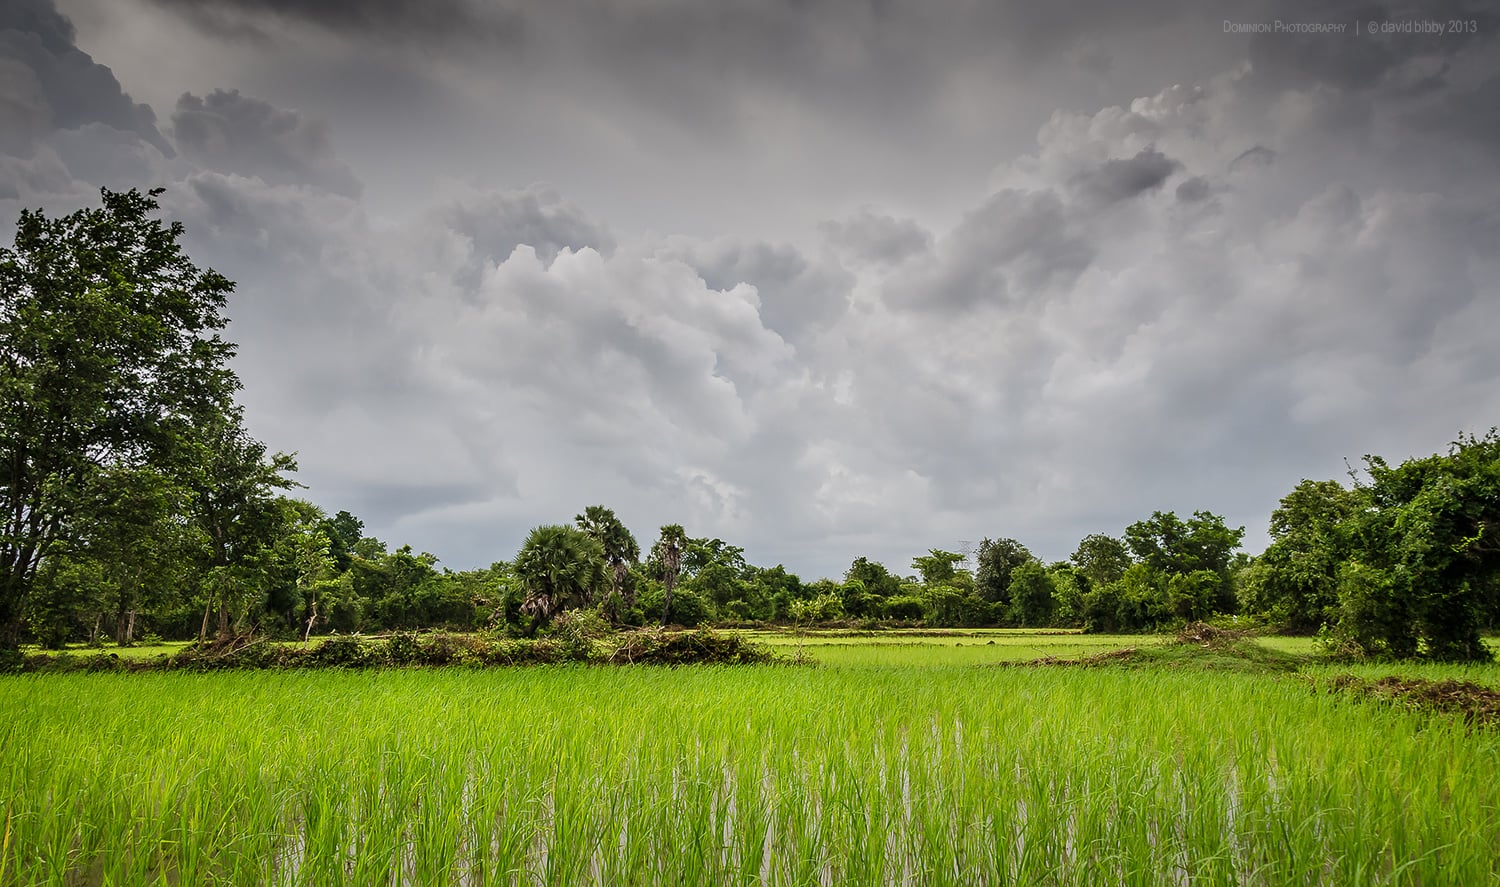   Wet season  - Rice paddies and developing rain. Kampong Cham Province, Cambodia. 